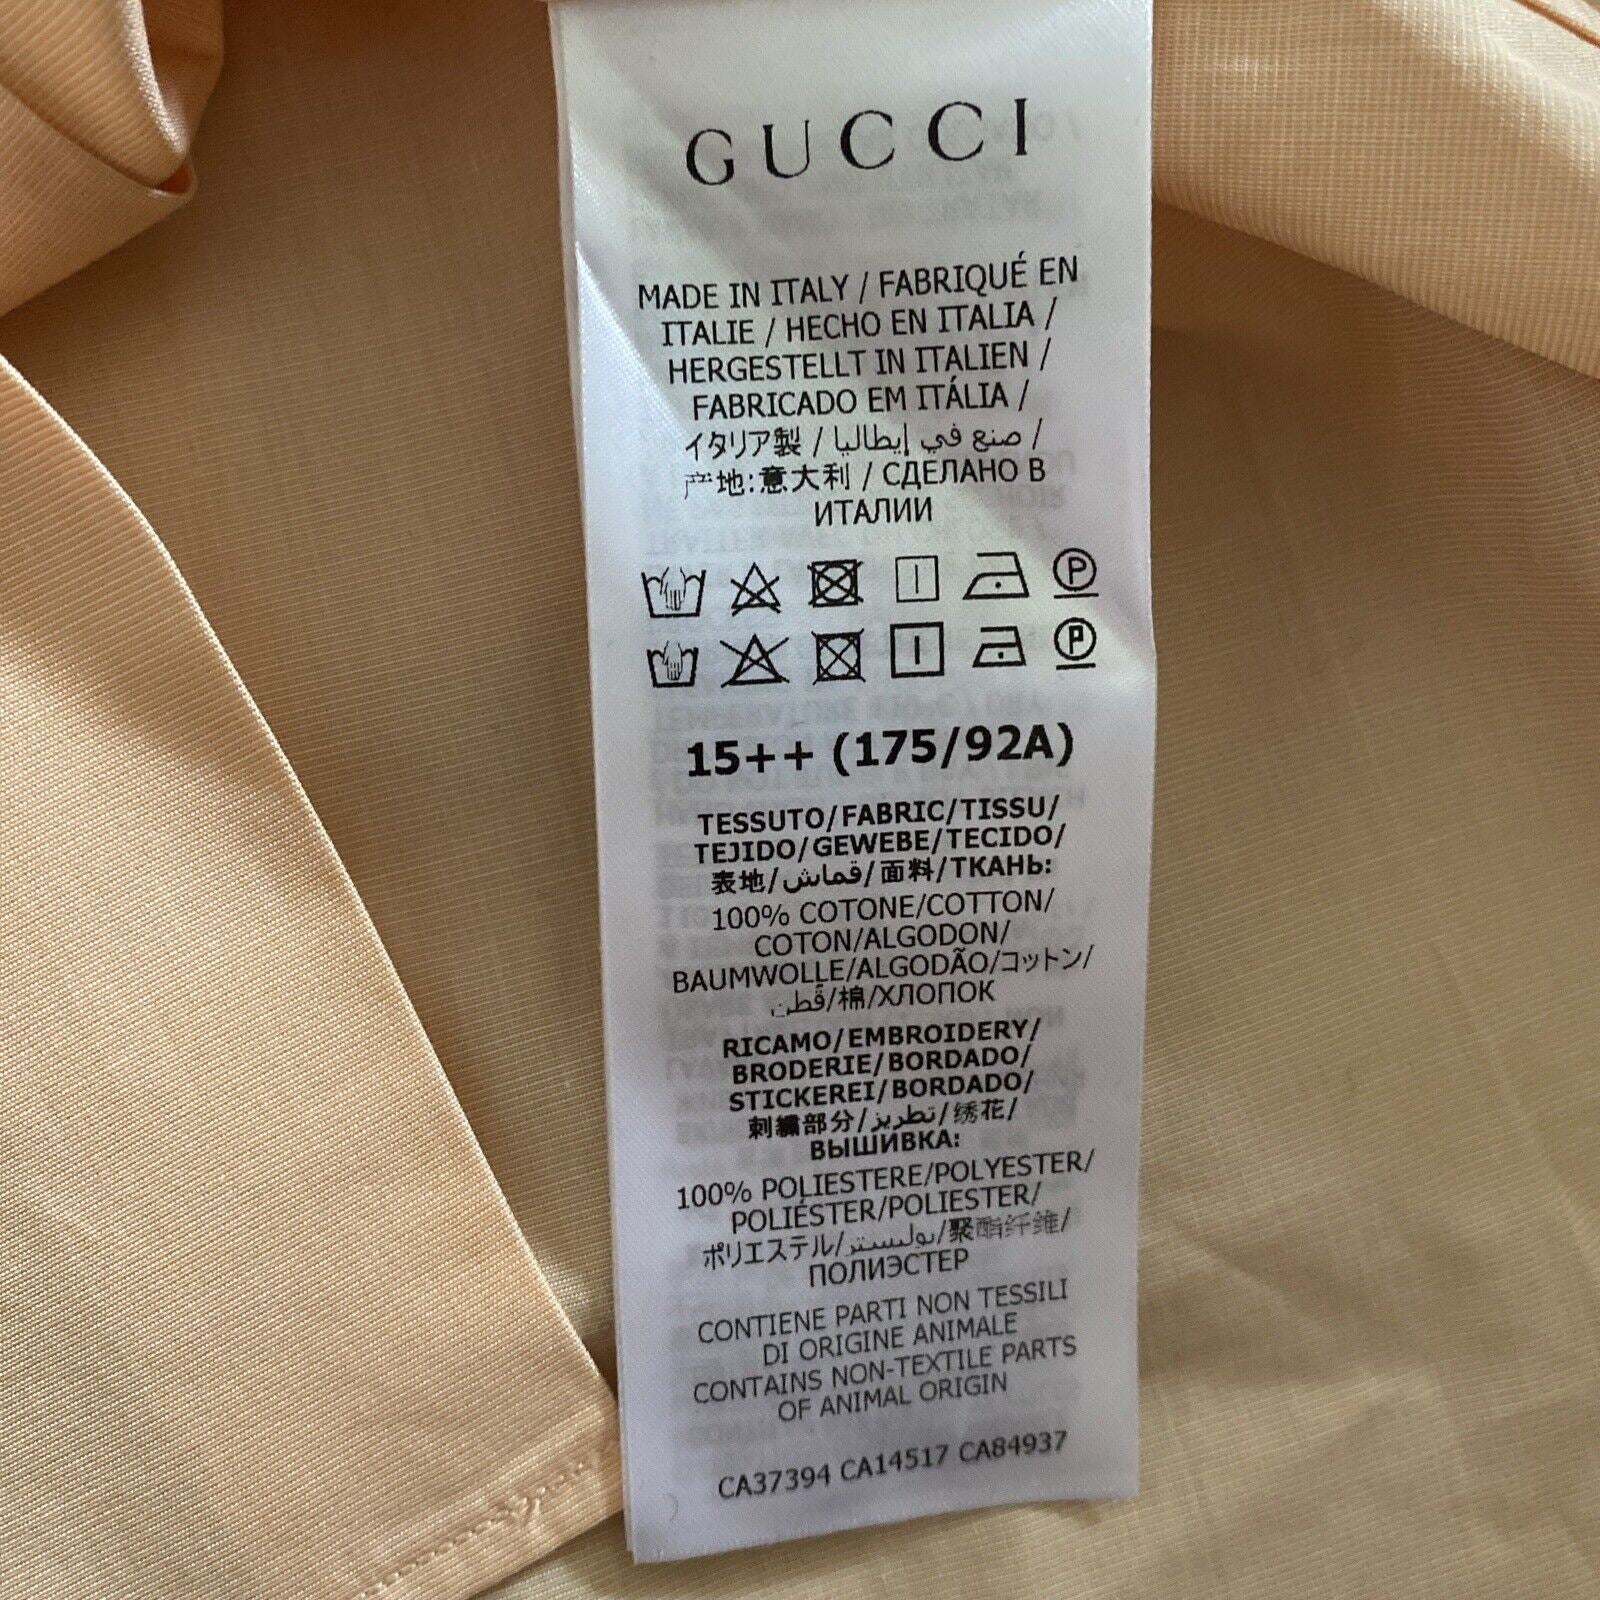 New Gucci Men’s Dress Shirt Color Violet-Lilac 40/15 3/4 Italy